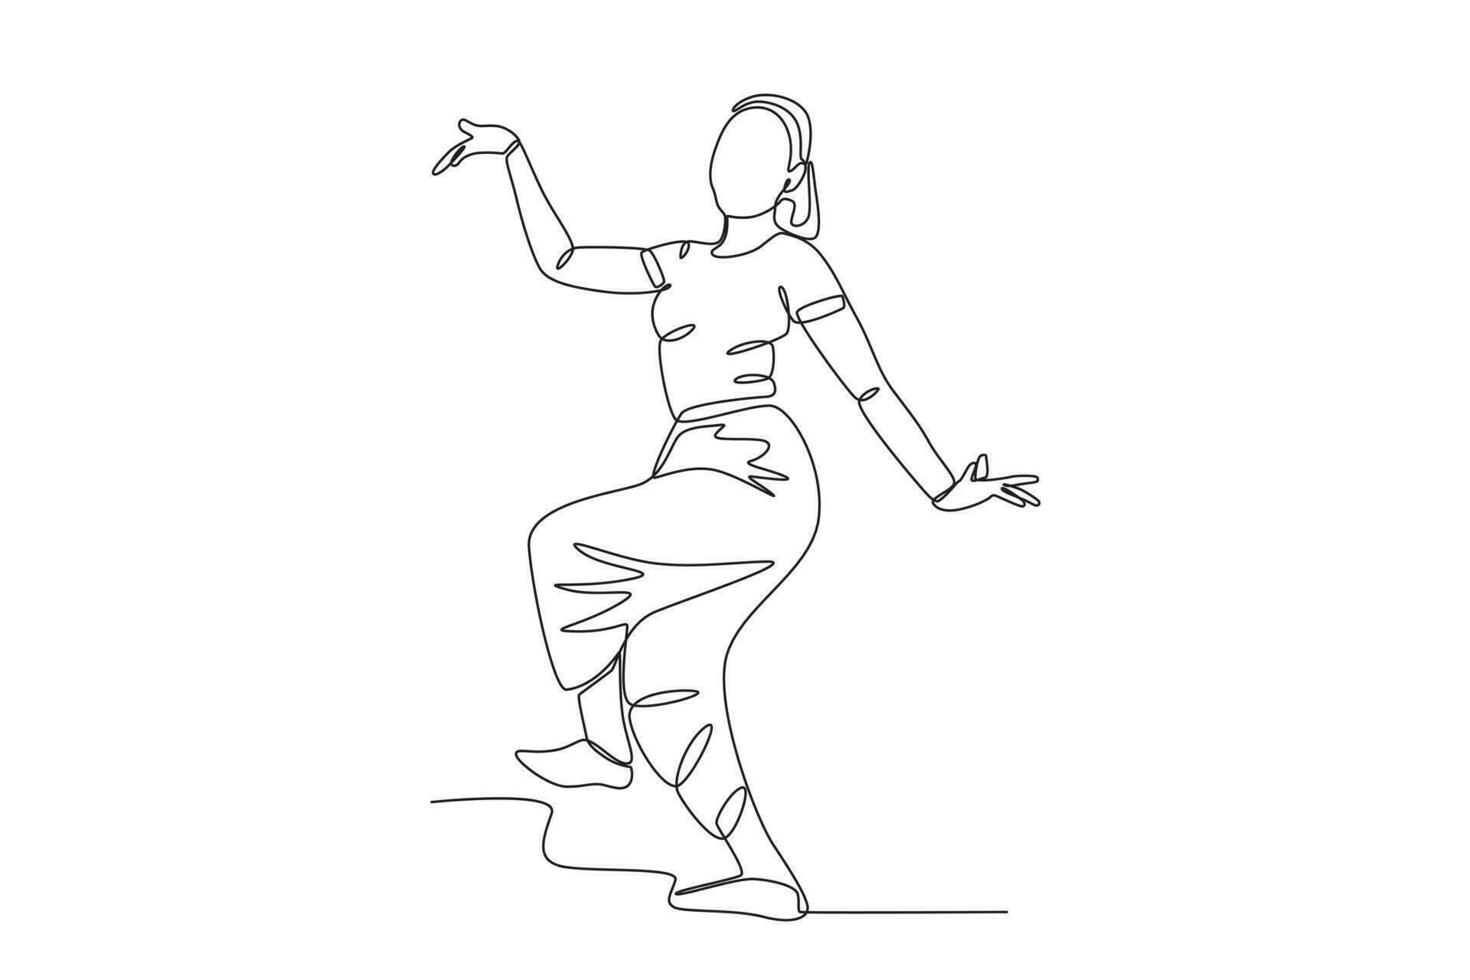 Tari Kecak is a typical Balinese dance vector